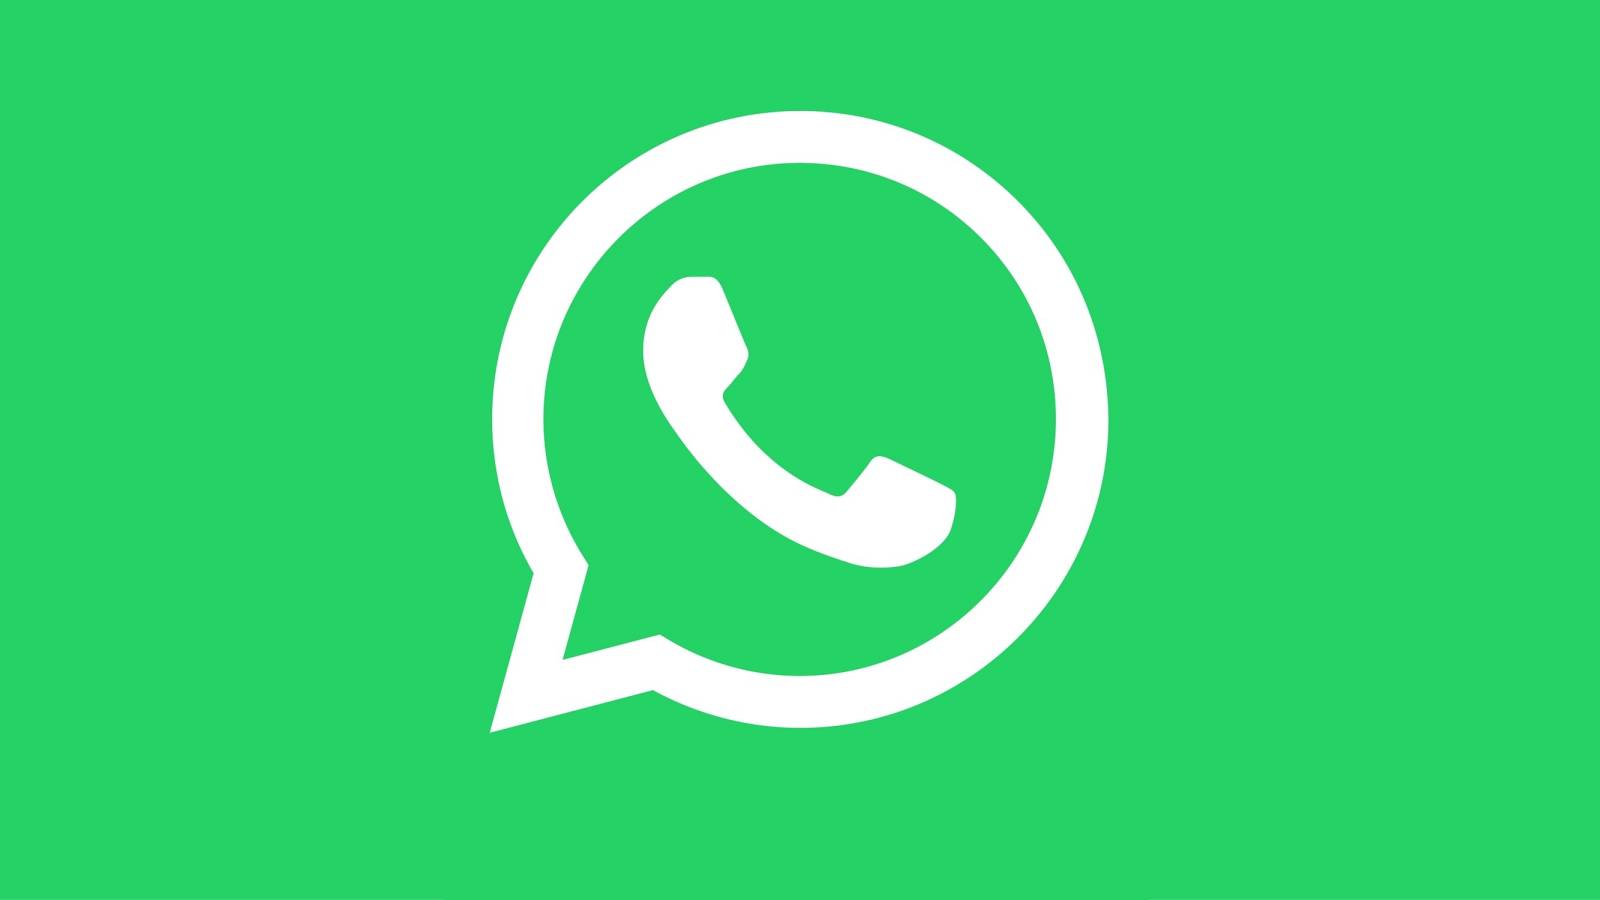 WhatsApp-vriendschap